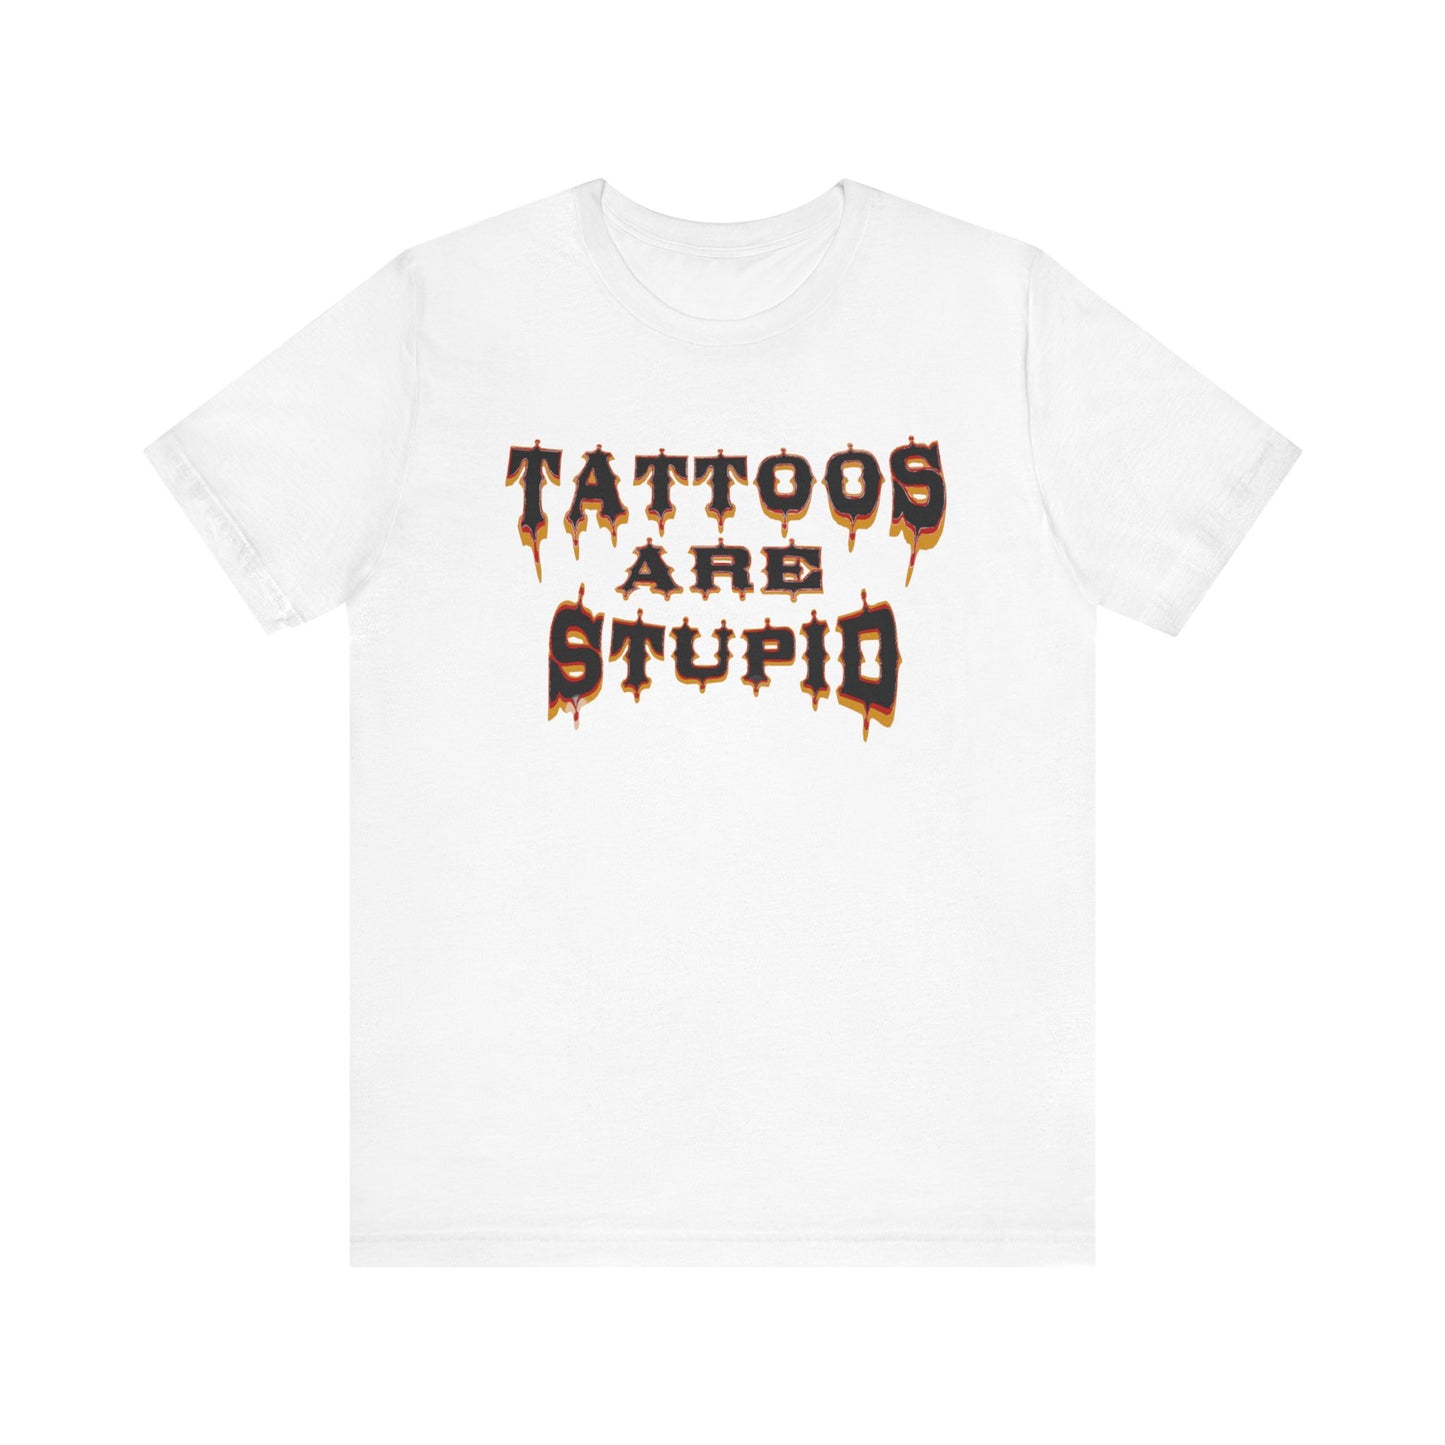 Tattoos are Stupid T-shirt